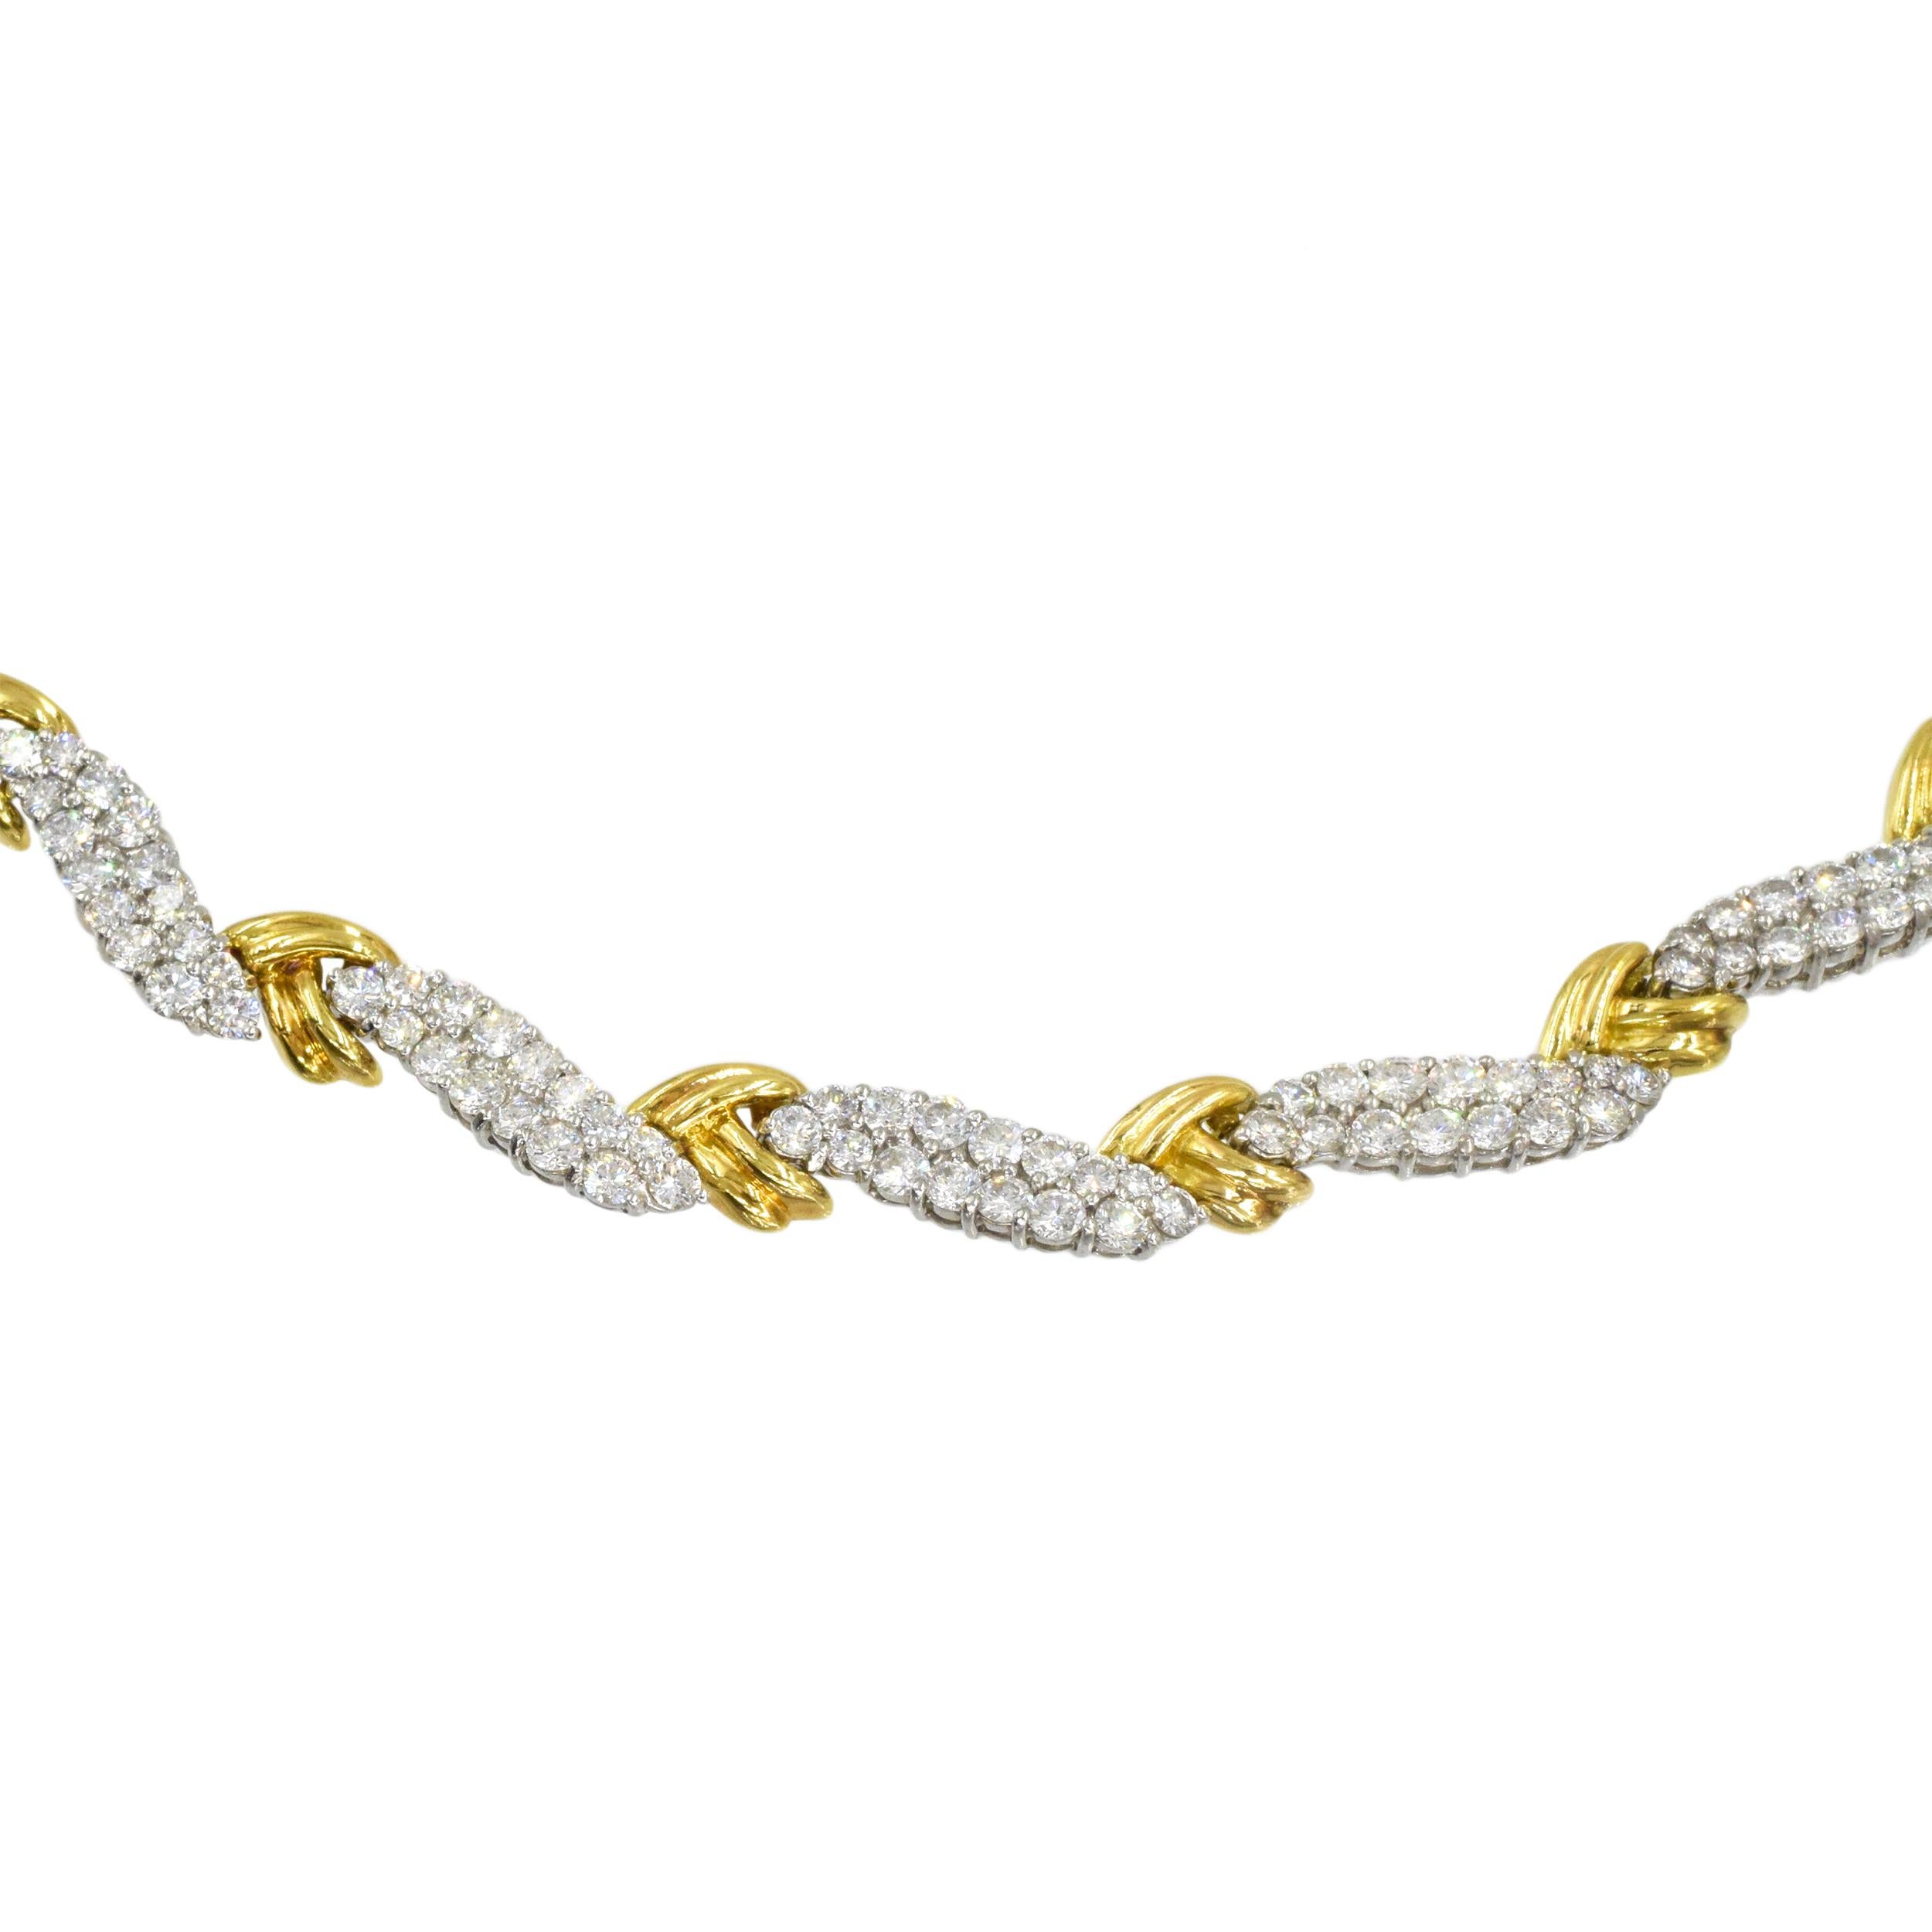 Artist Tiffany & Co. Platinum, Gold and Diamond Necklace